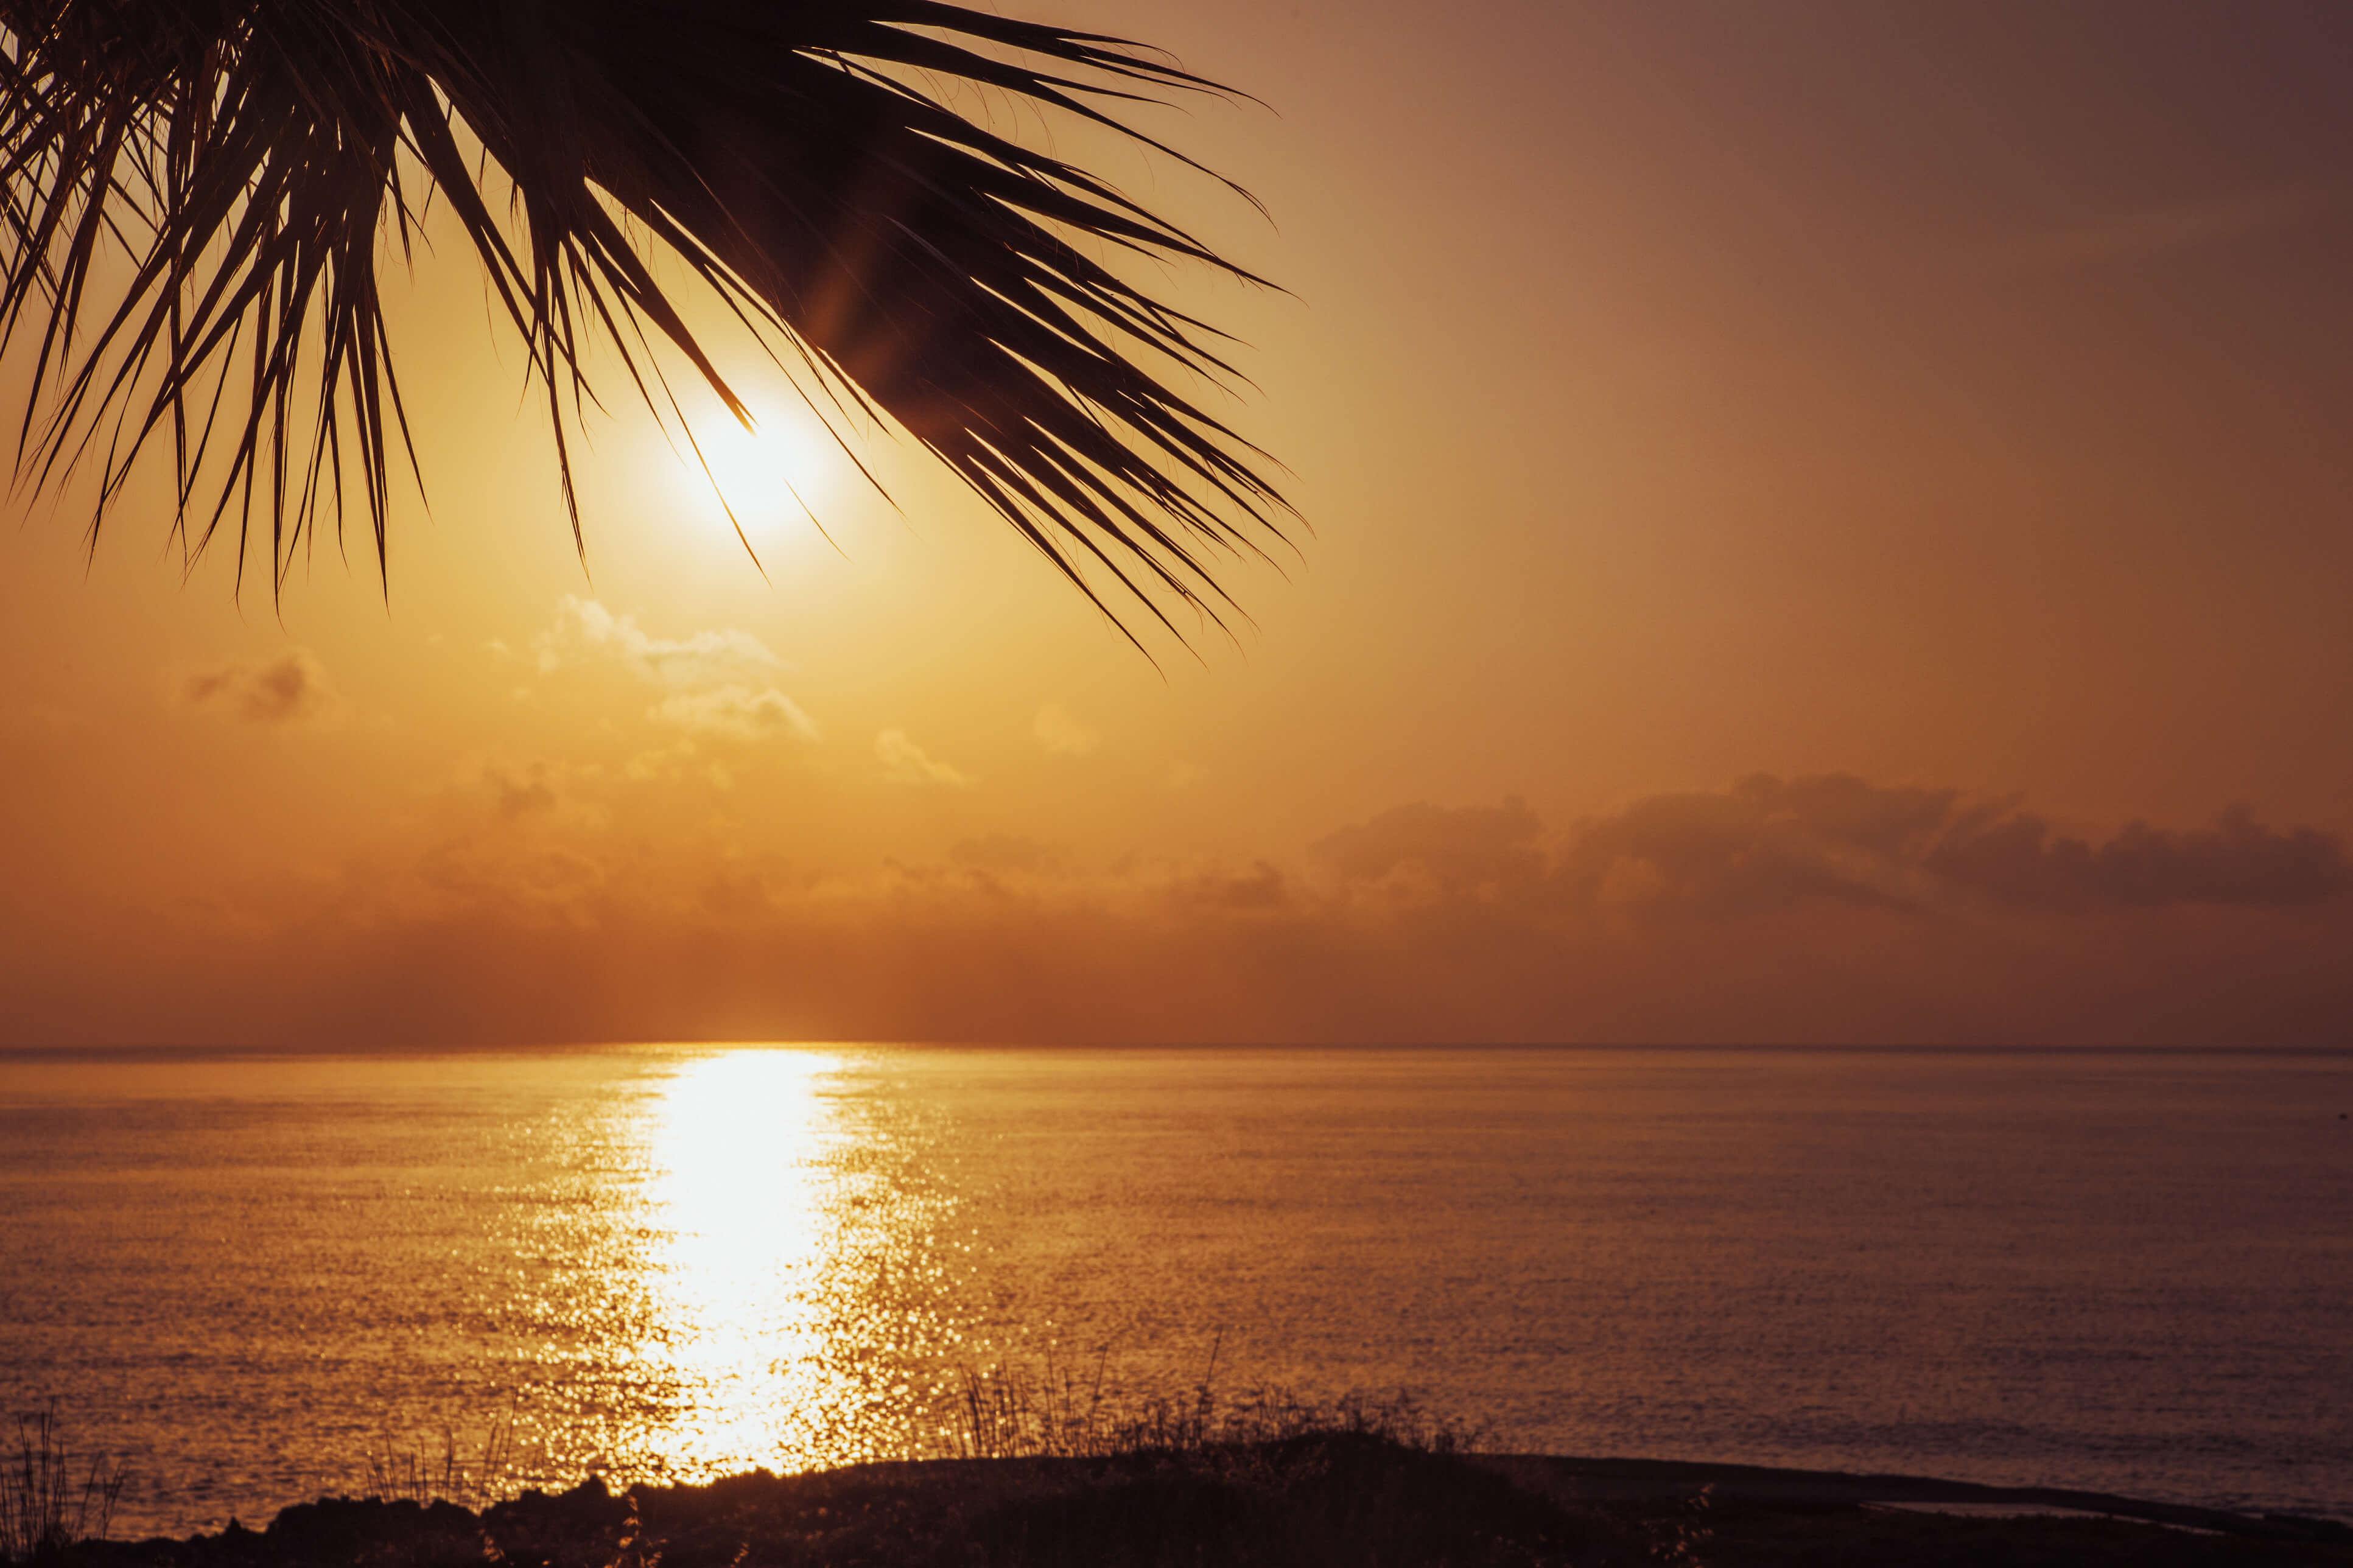 https://www.cyprusparadise.com/media/6643/sunset-palm-tree-karpaz.jpg